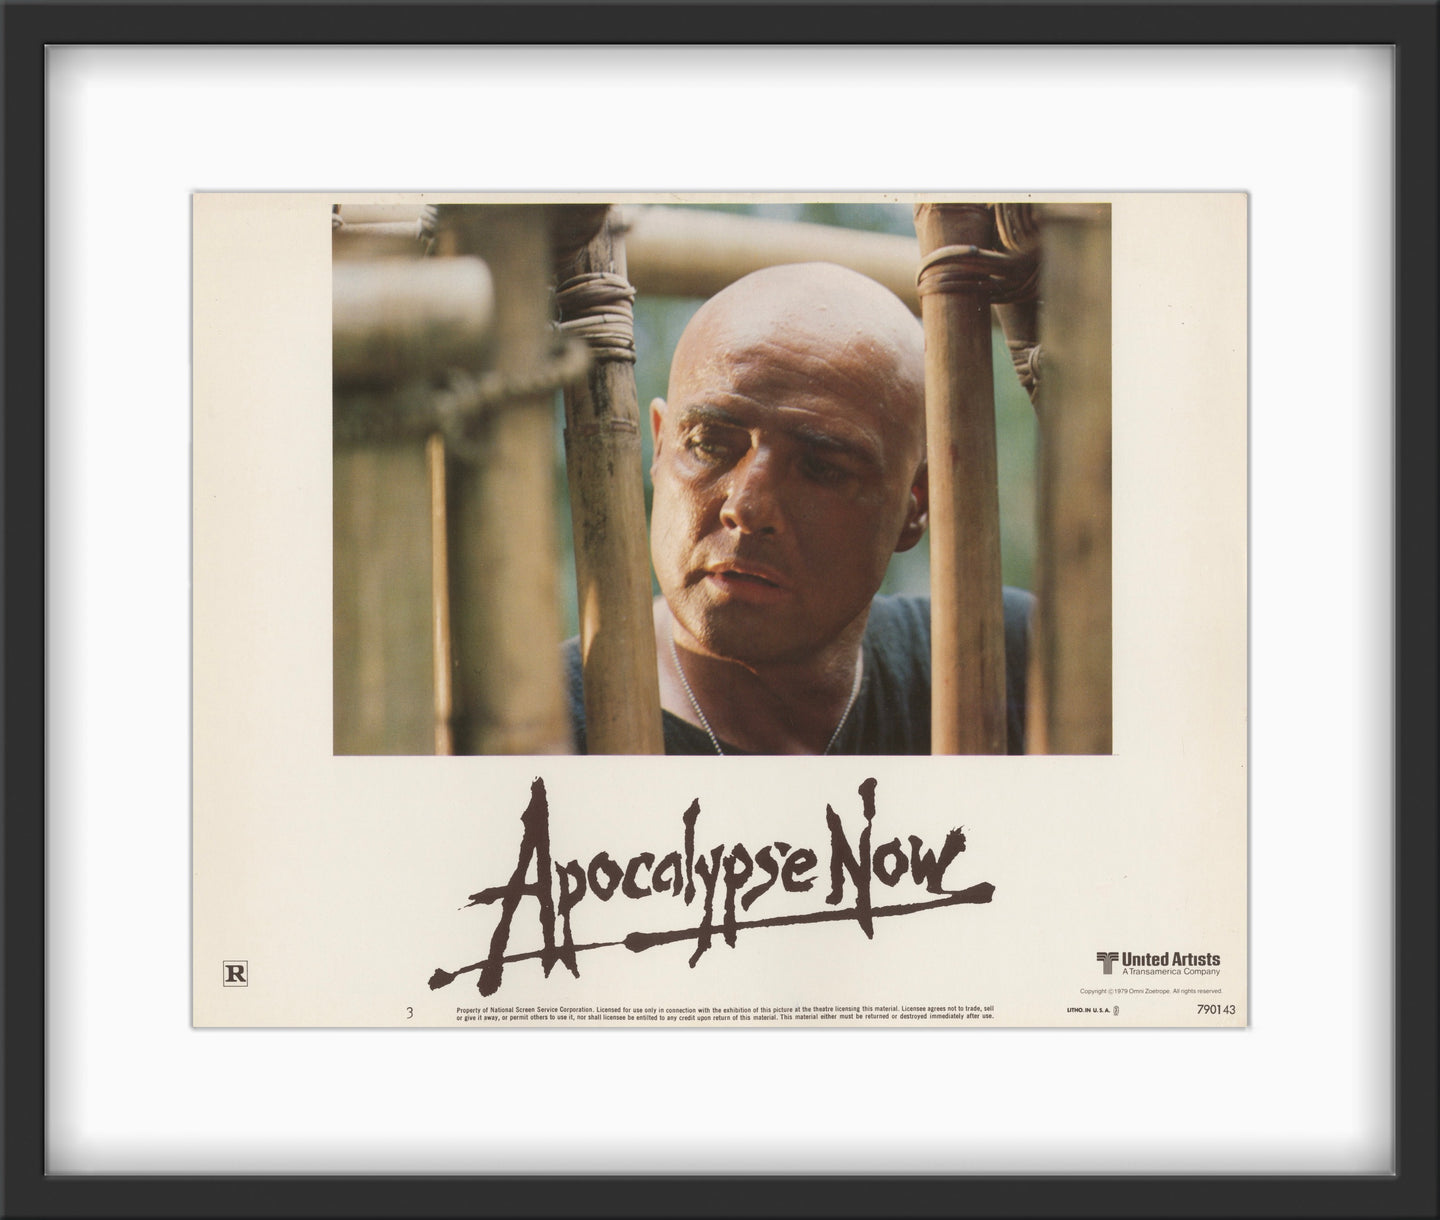 An original 11x14 lobby card for the film Apocalypse Now